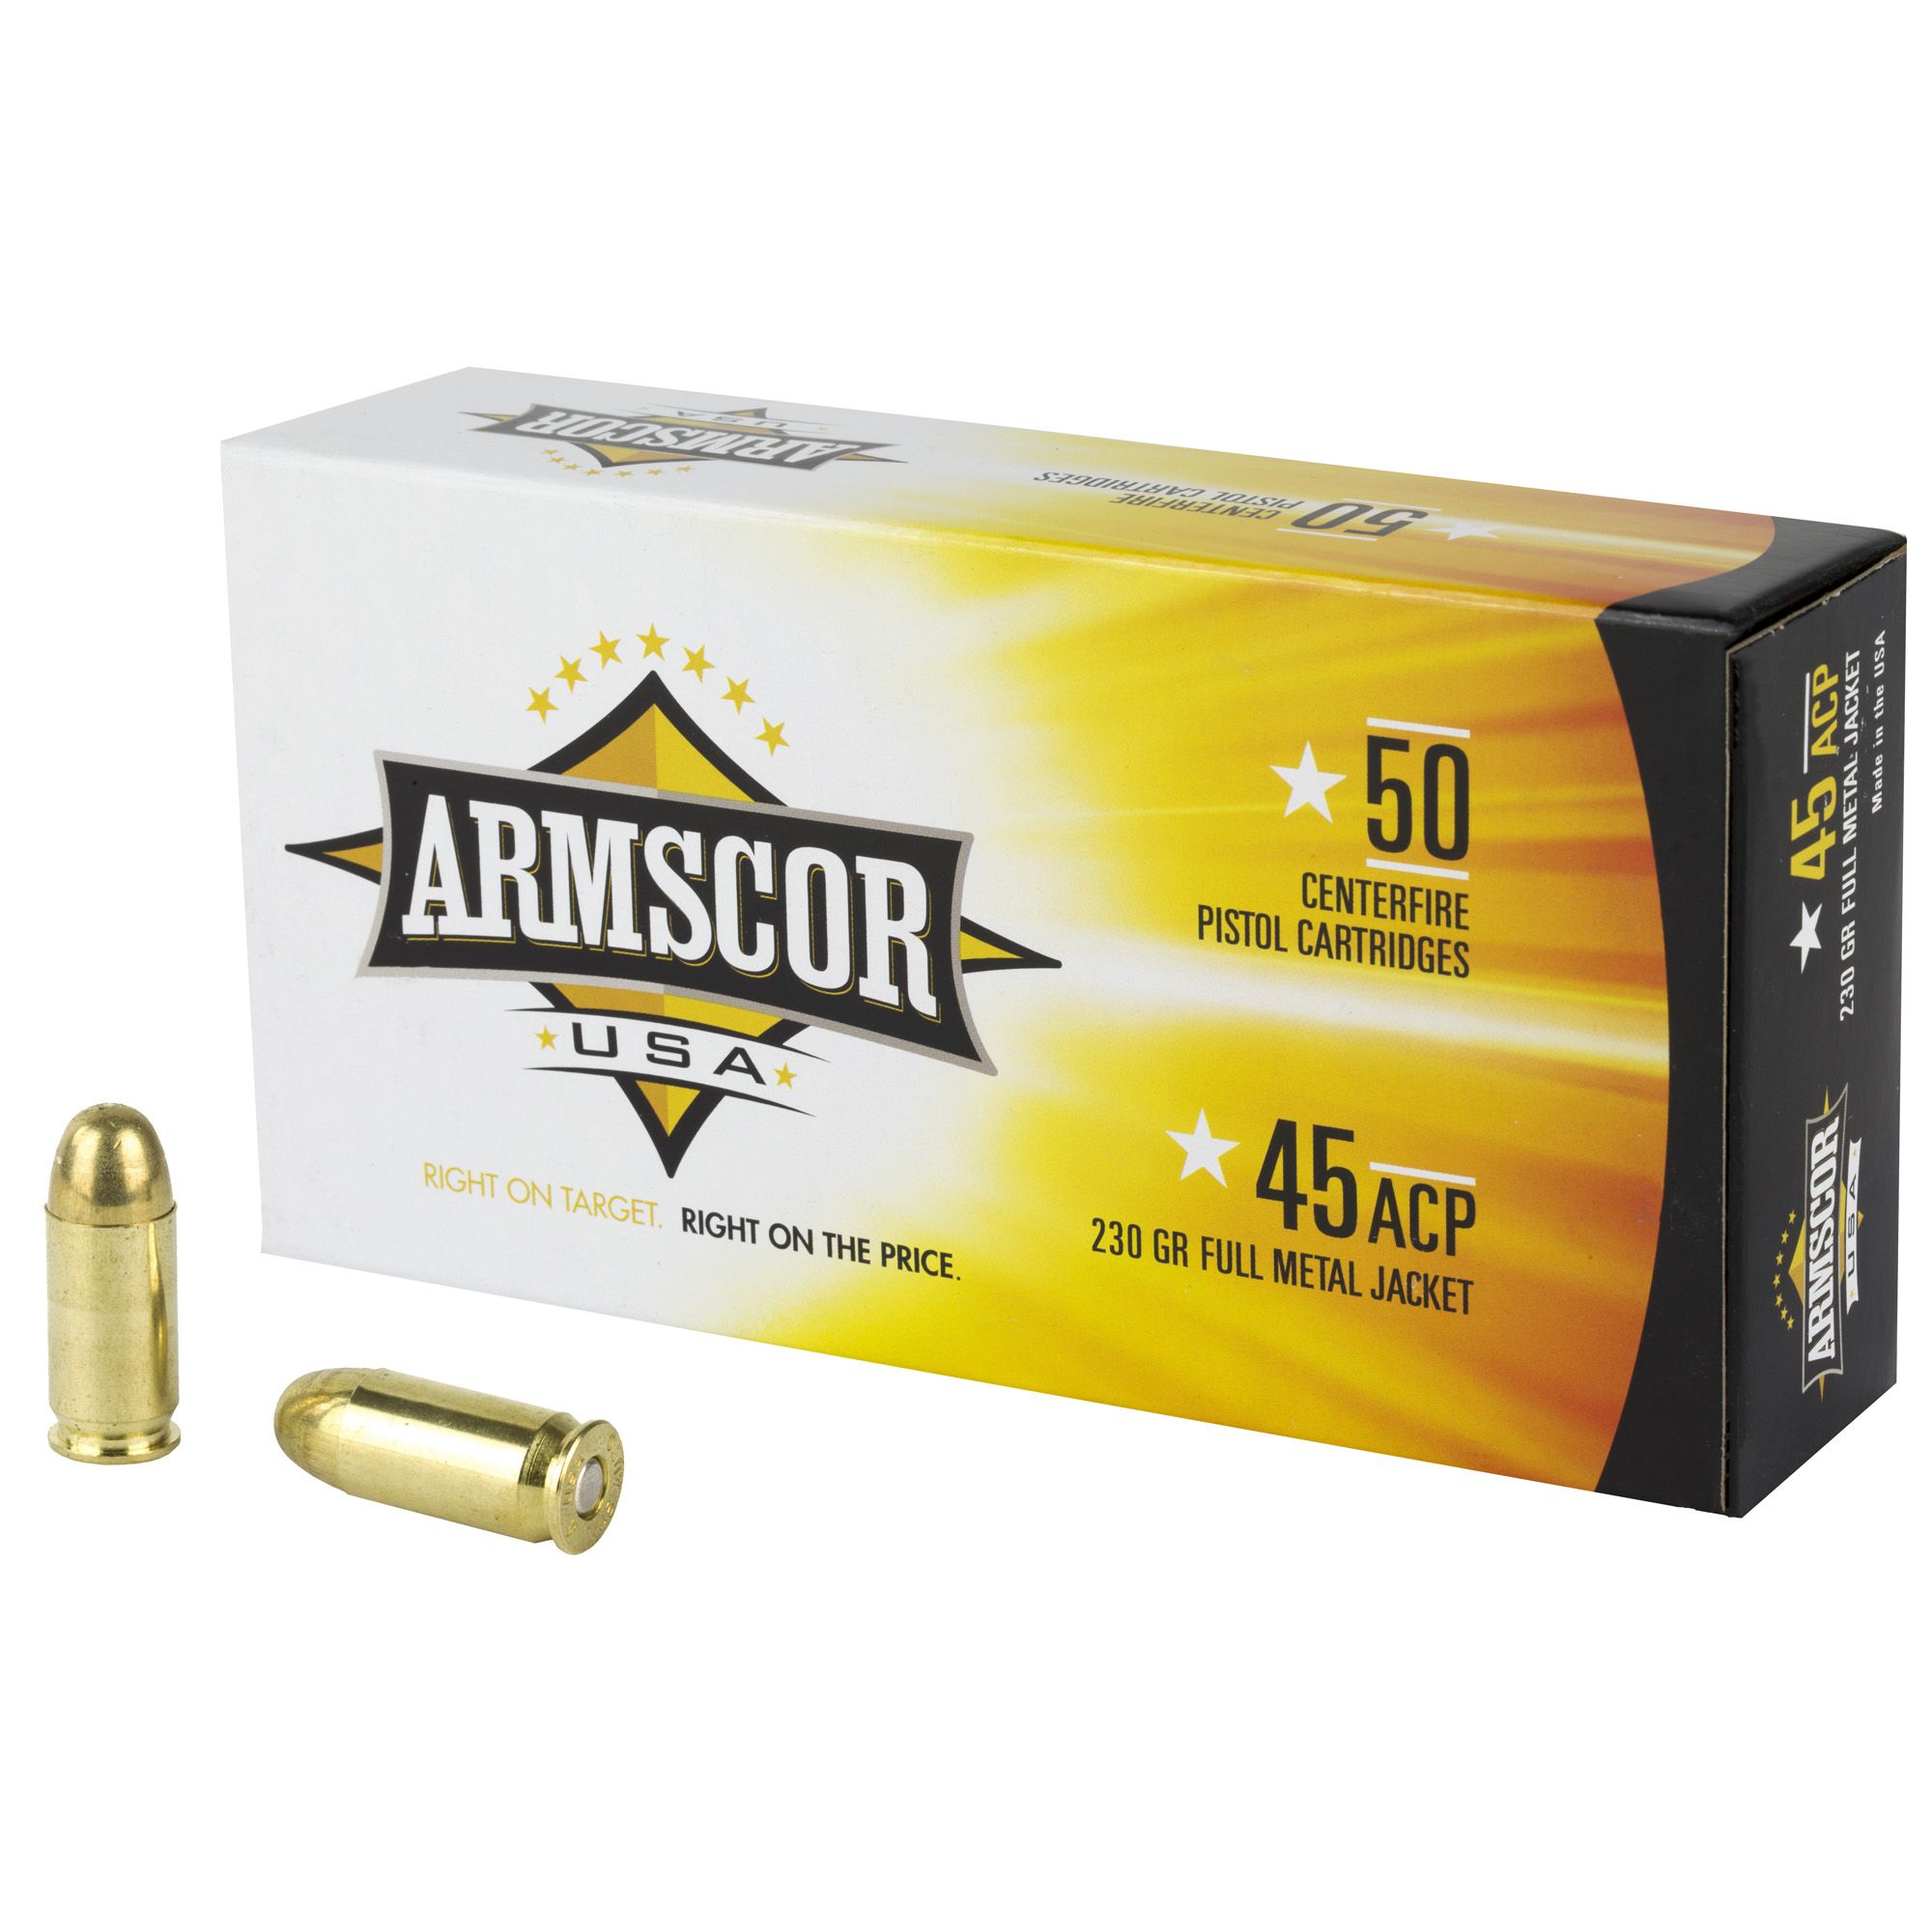 Armscor 45 ACP 230 Grain Full Metal Jacket, 50 Round Box